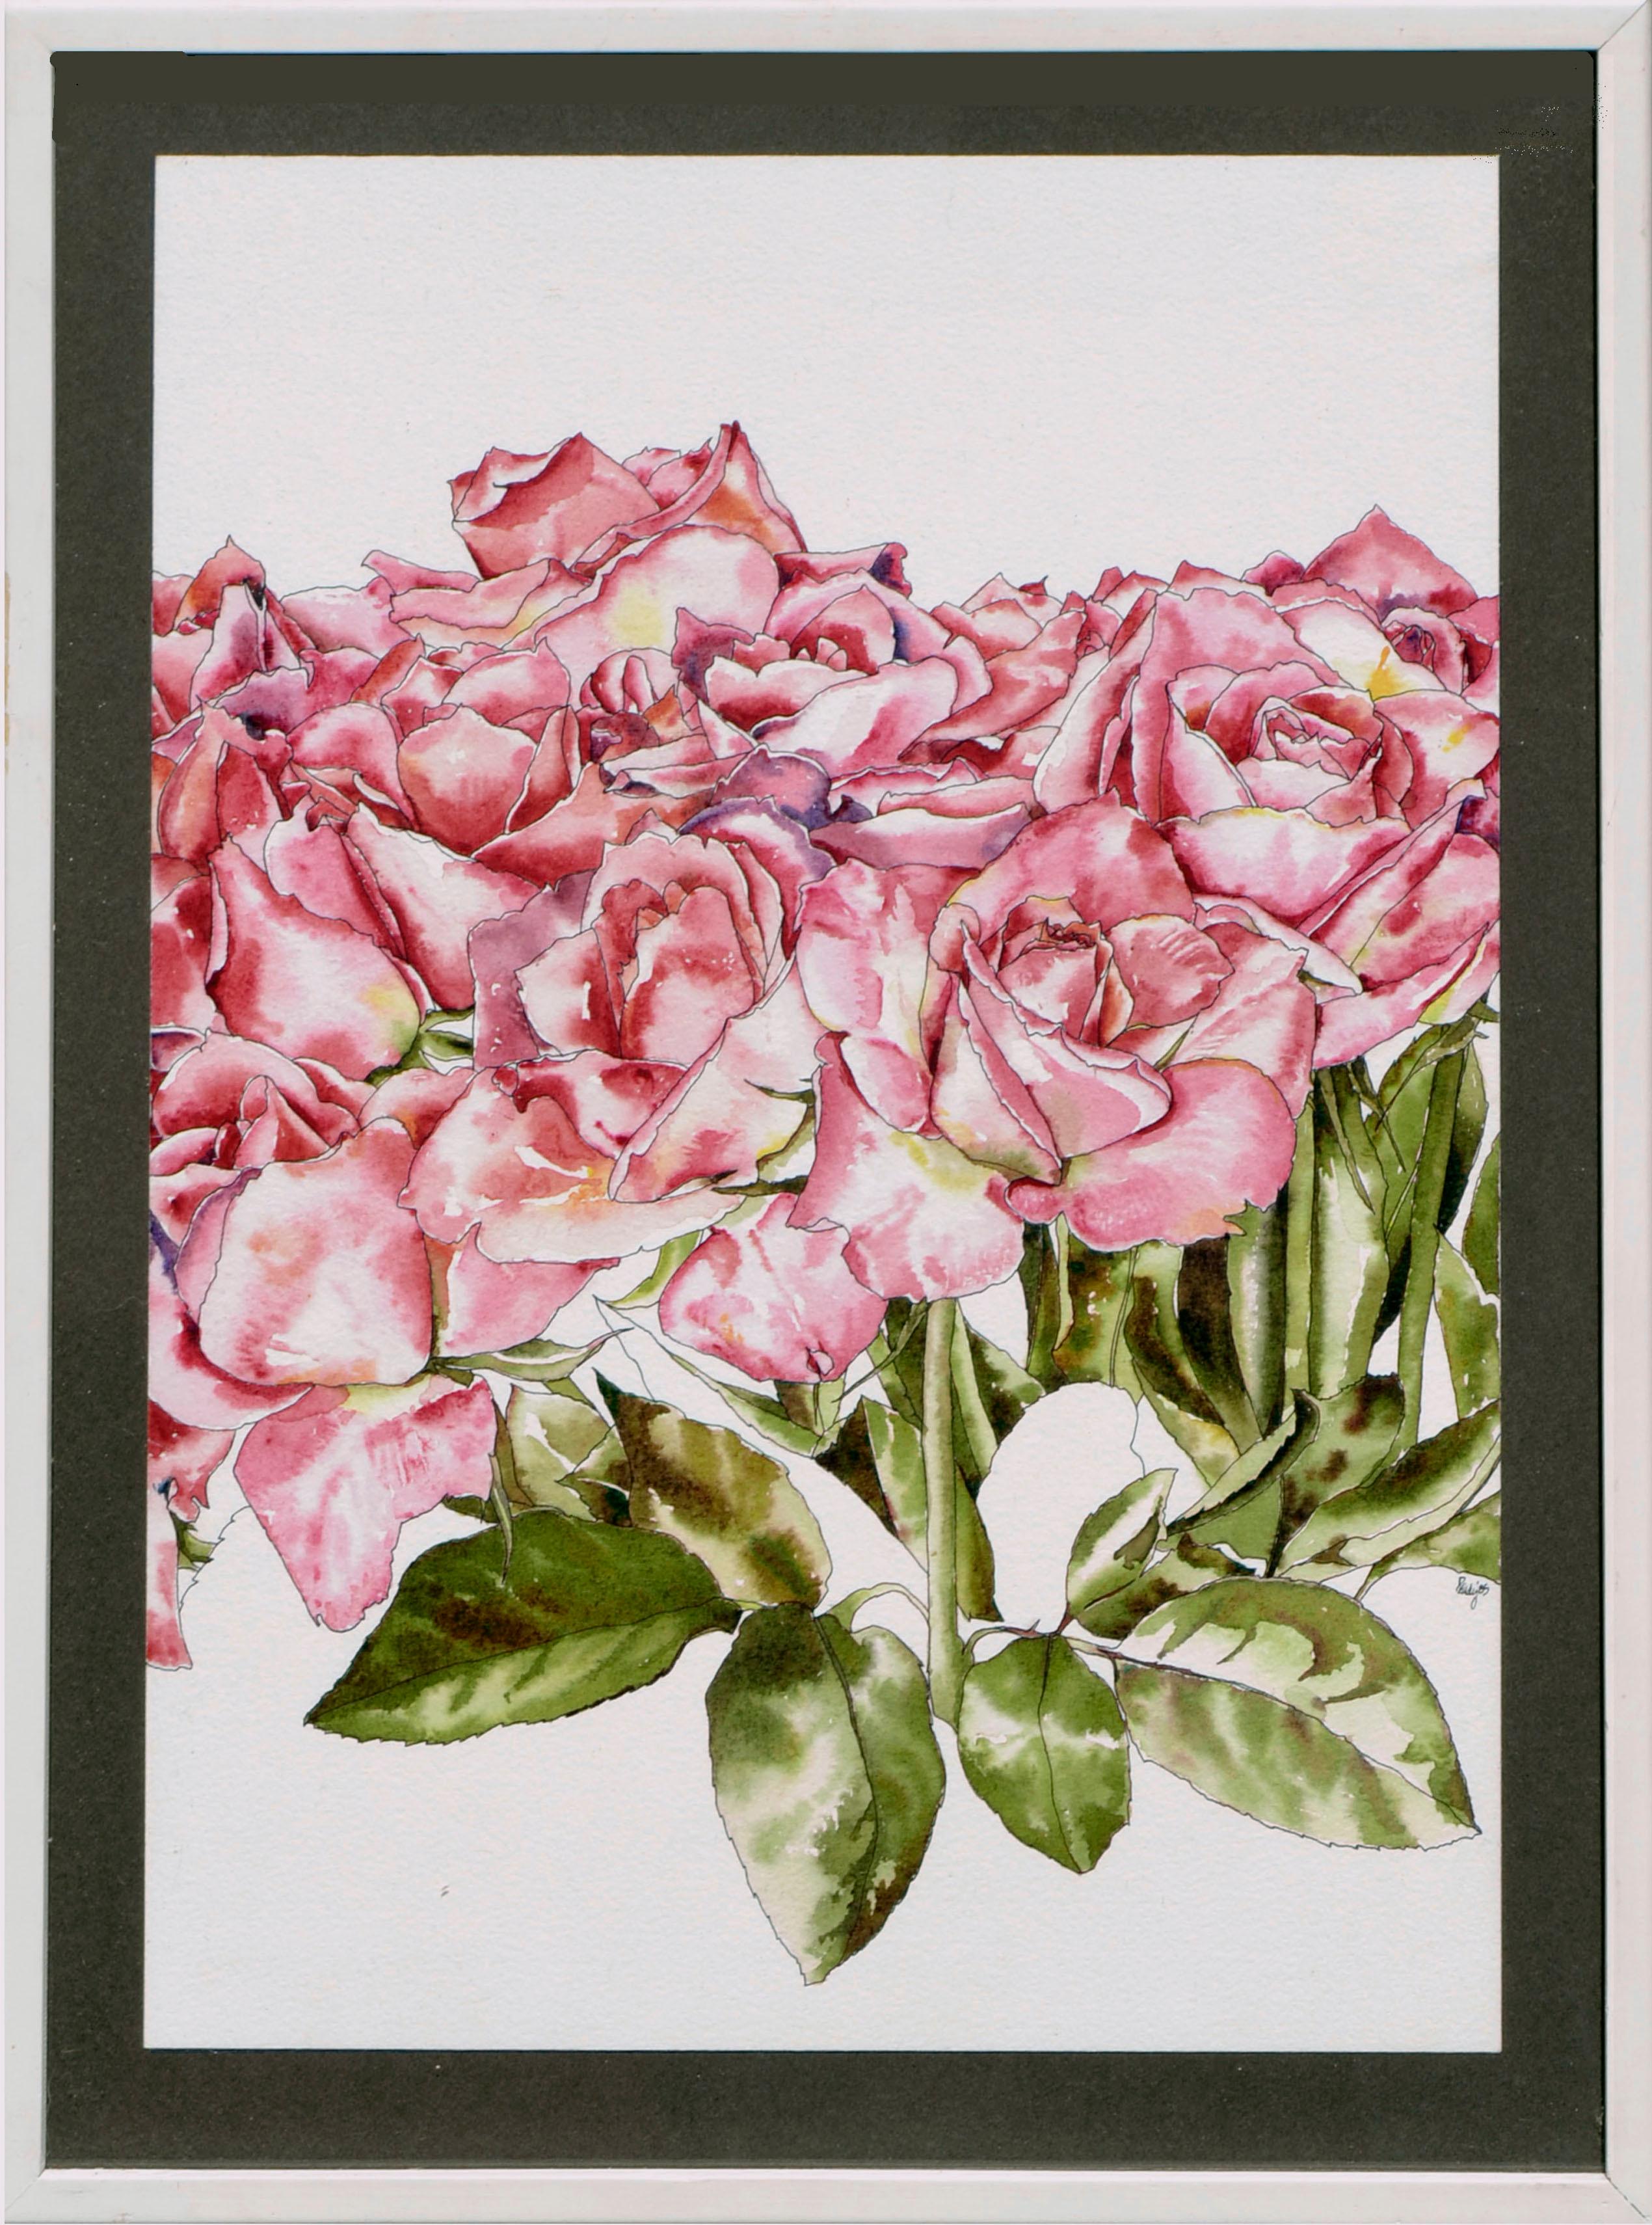 Hot Pink Roses - Botanical Study 